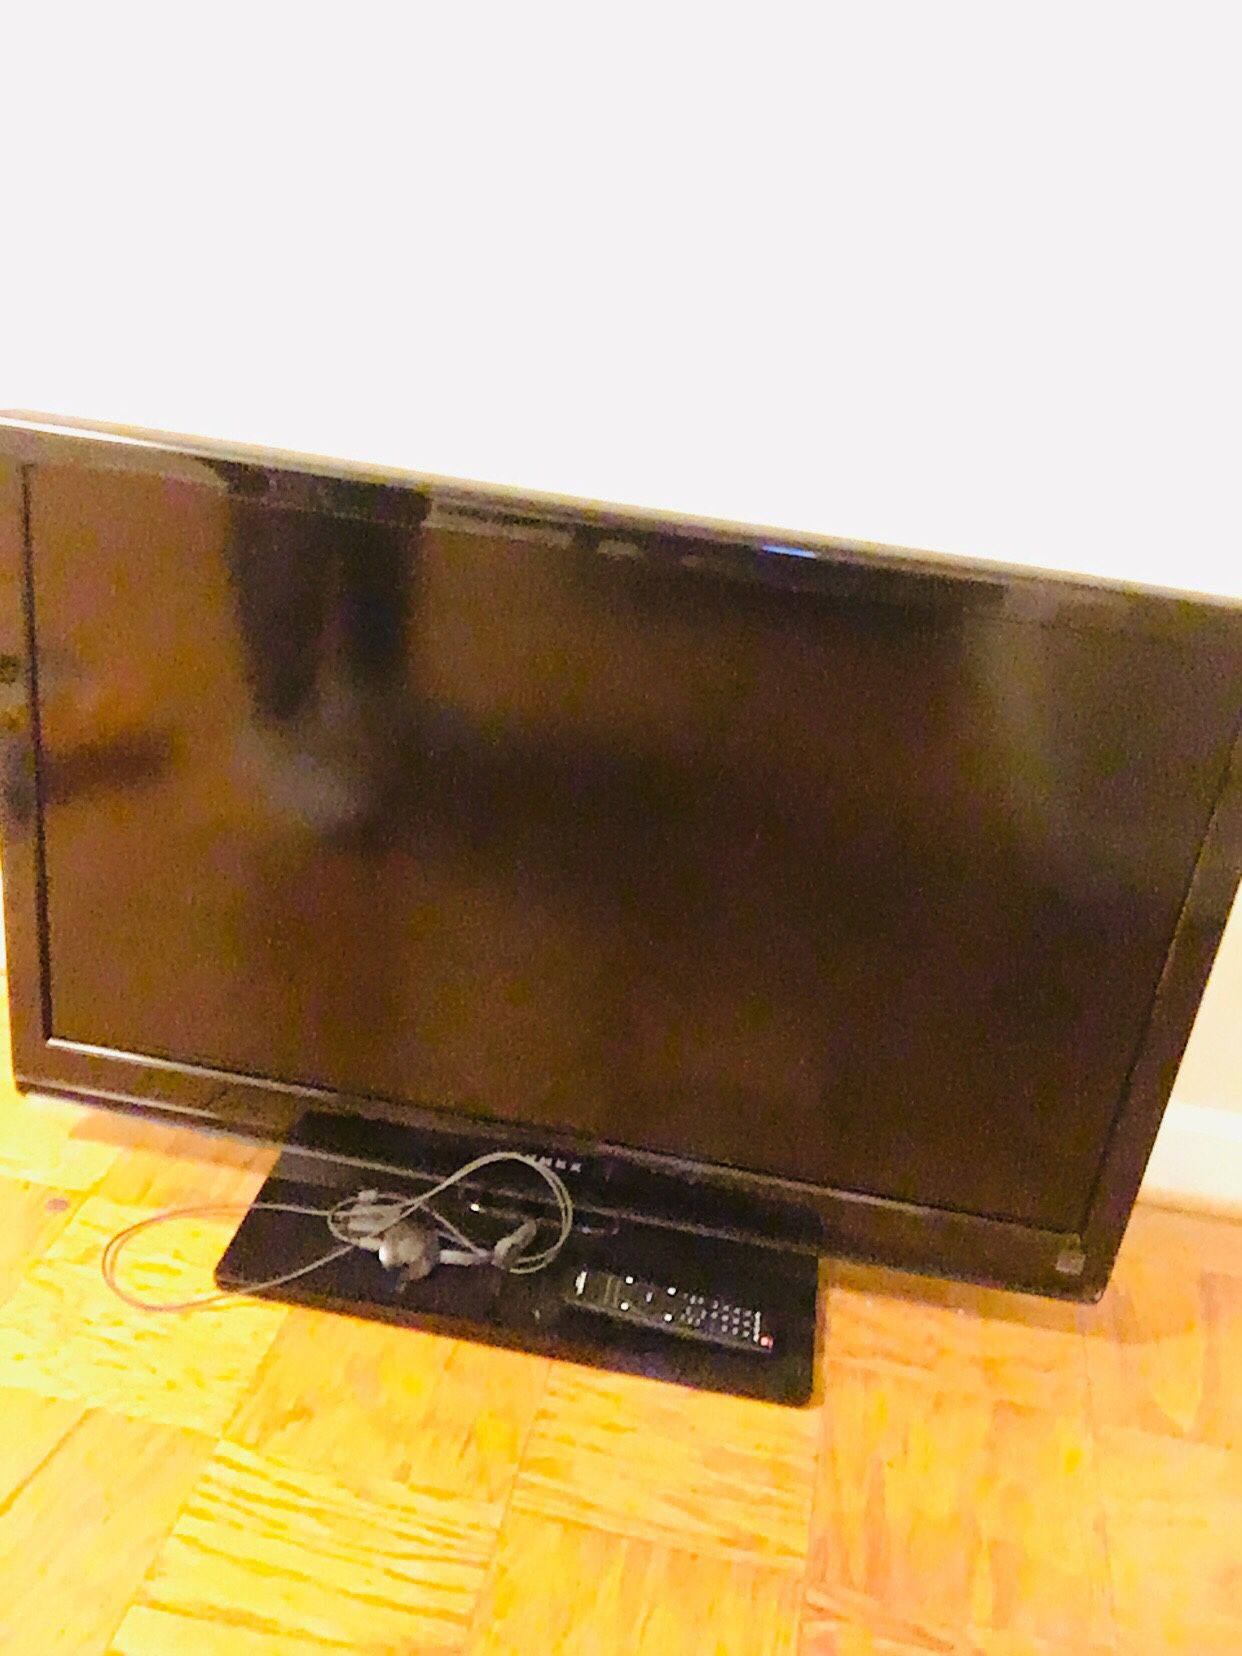 42” Dynex flat screen LCD HDTV and chromecast